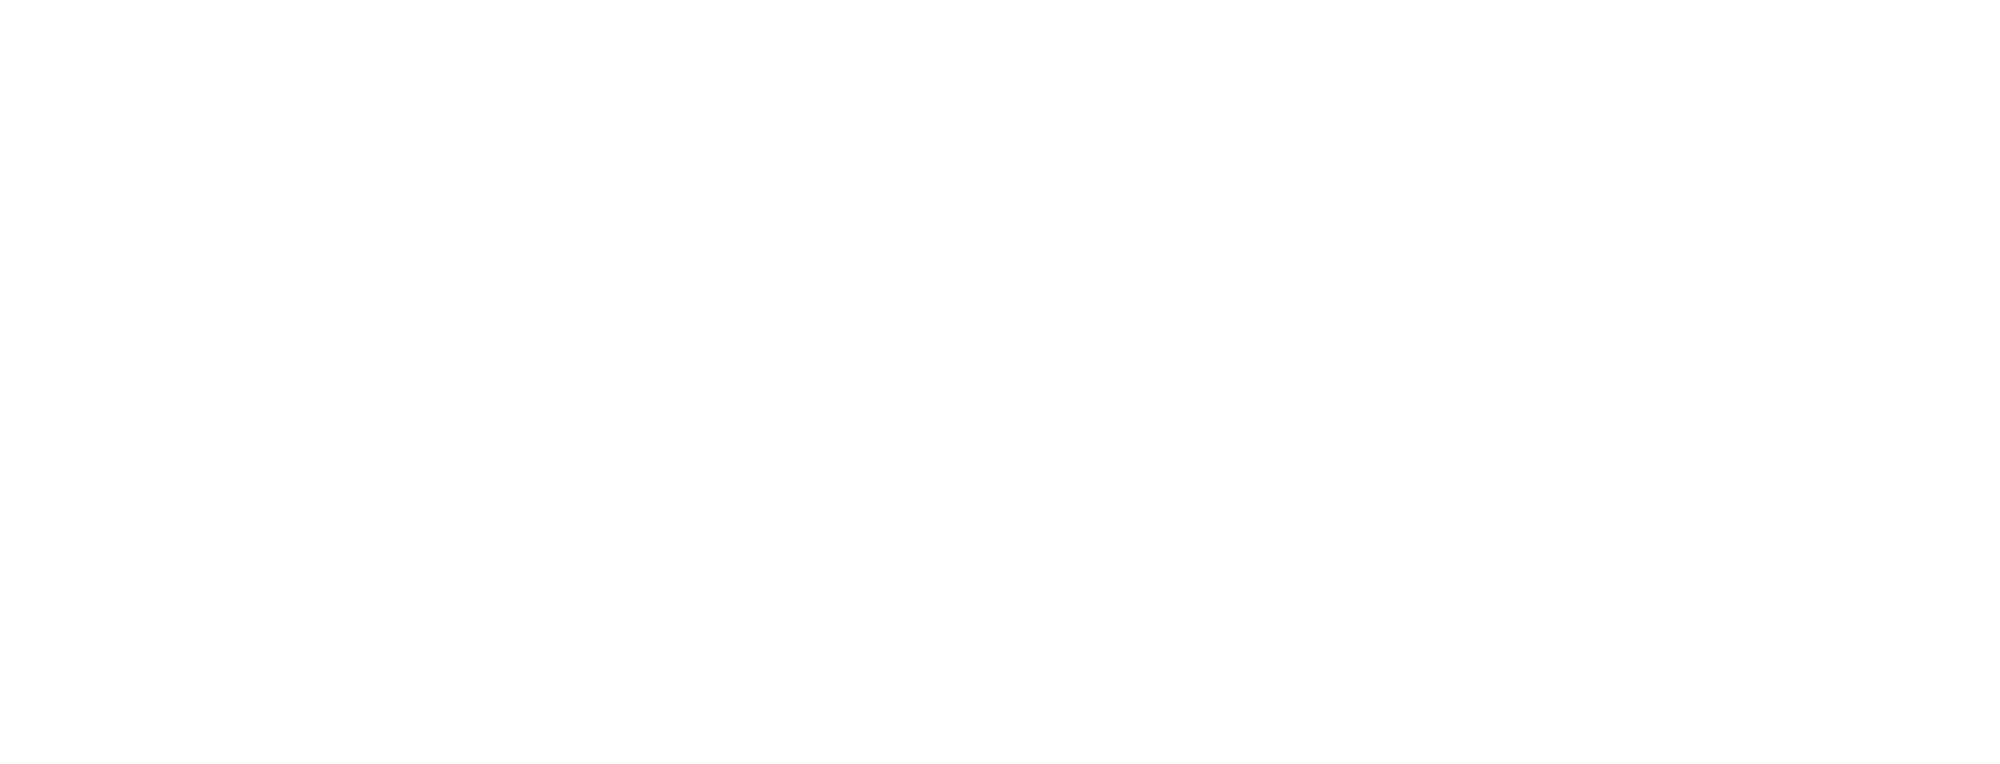 Digital Legends Entertainment logo